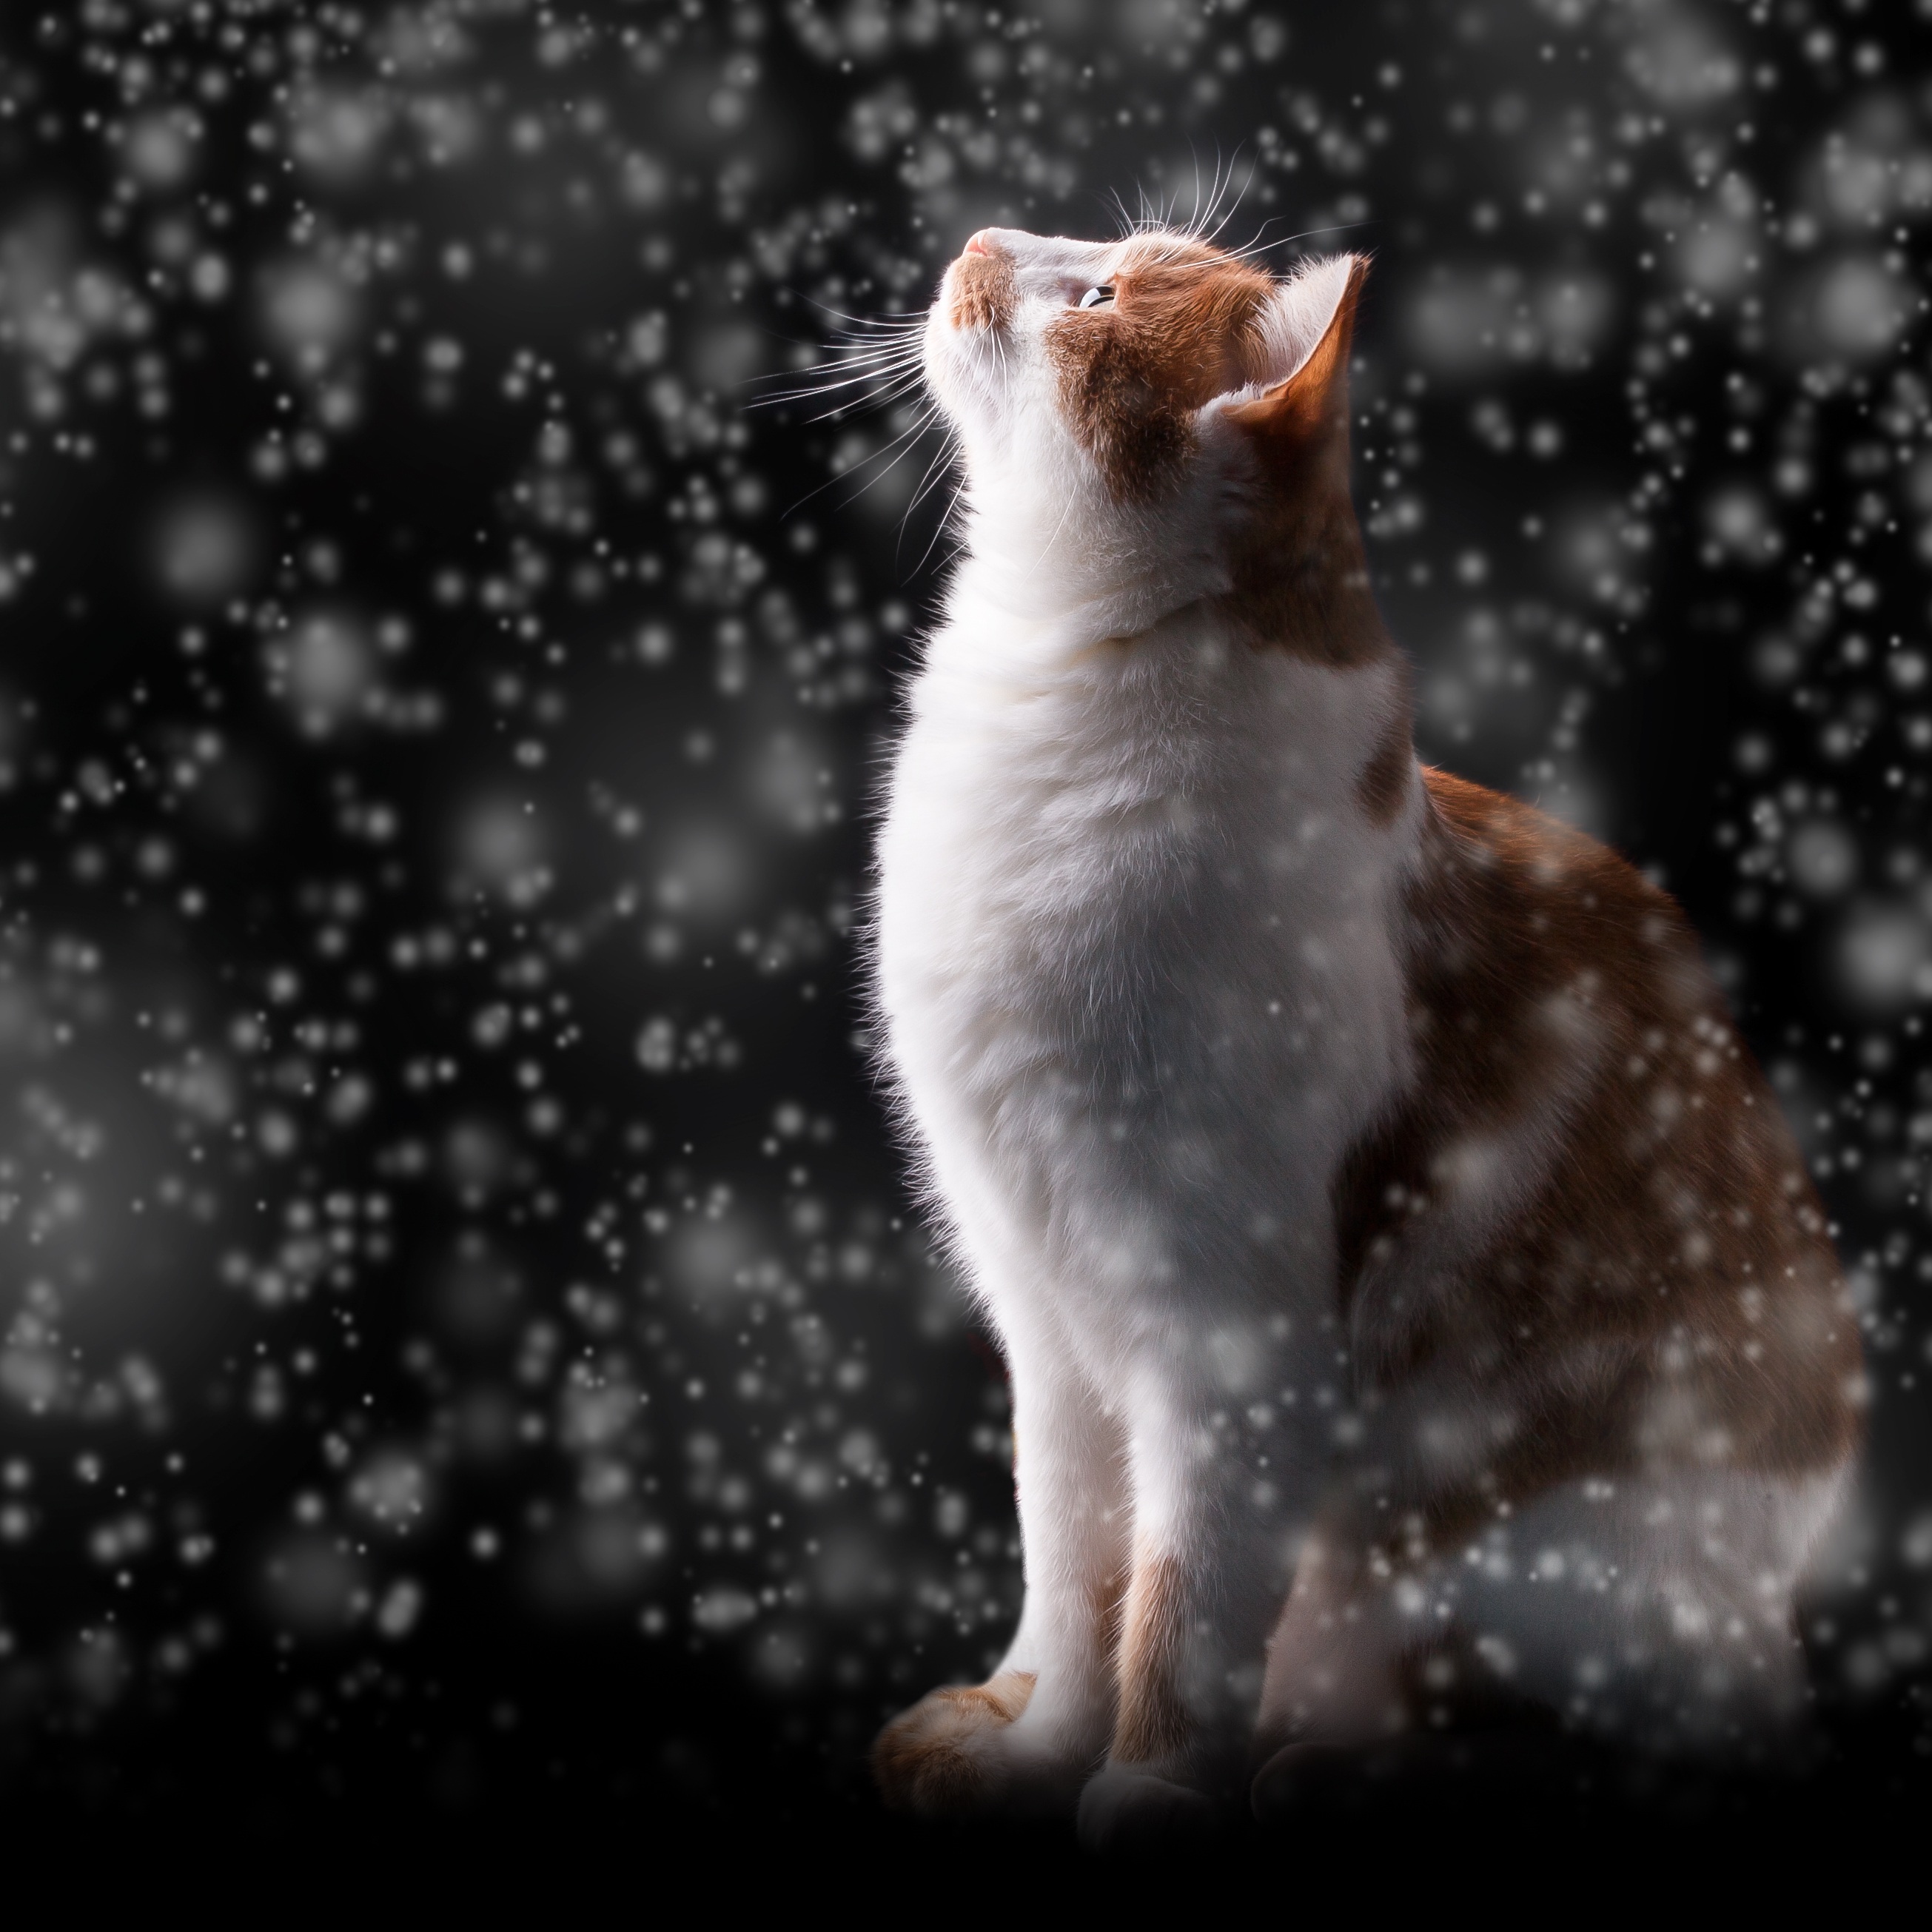 photoshop, snowfall, boquet, cat, animals, snow, glare, bokeh